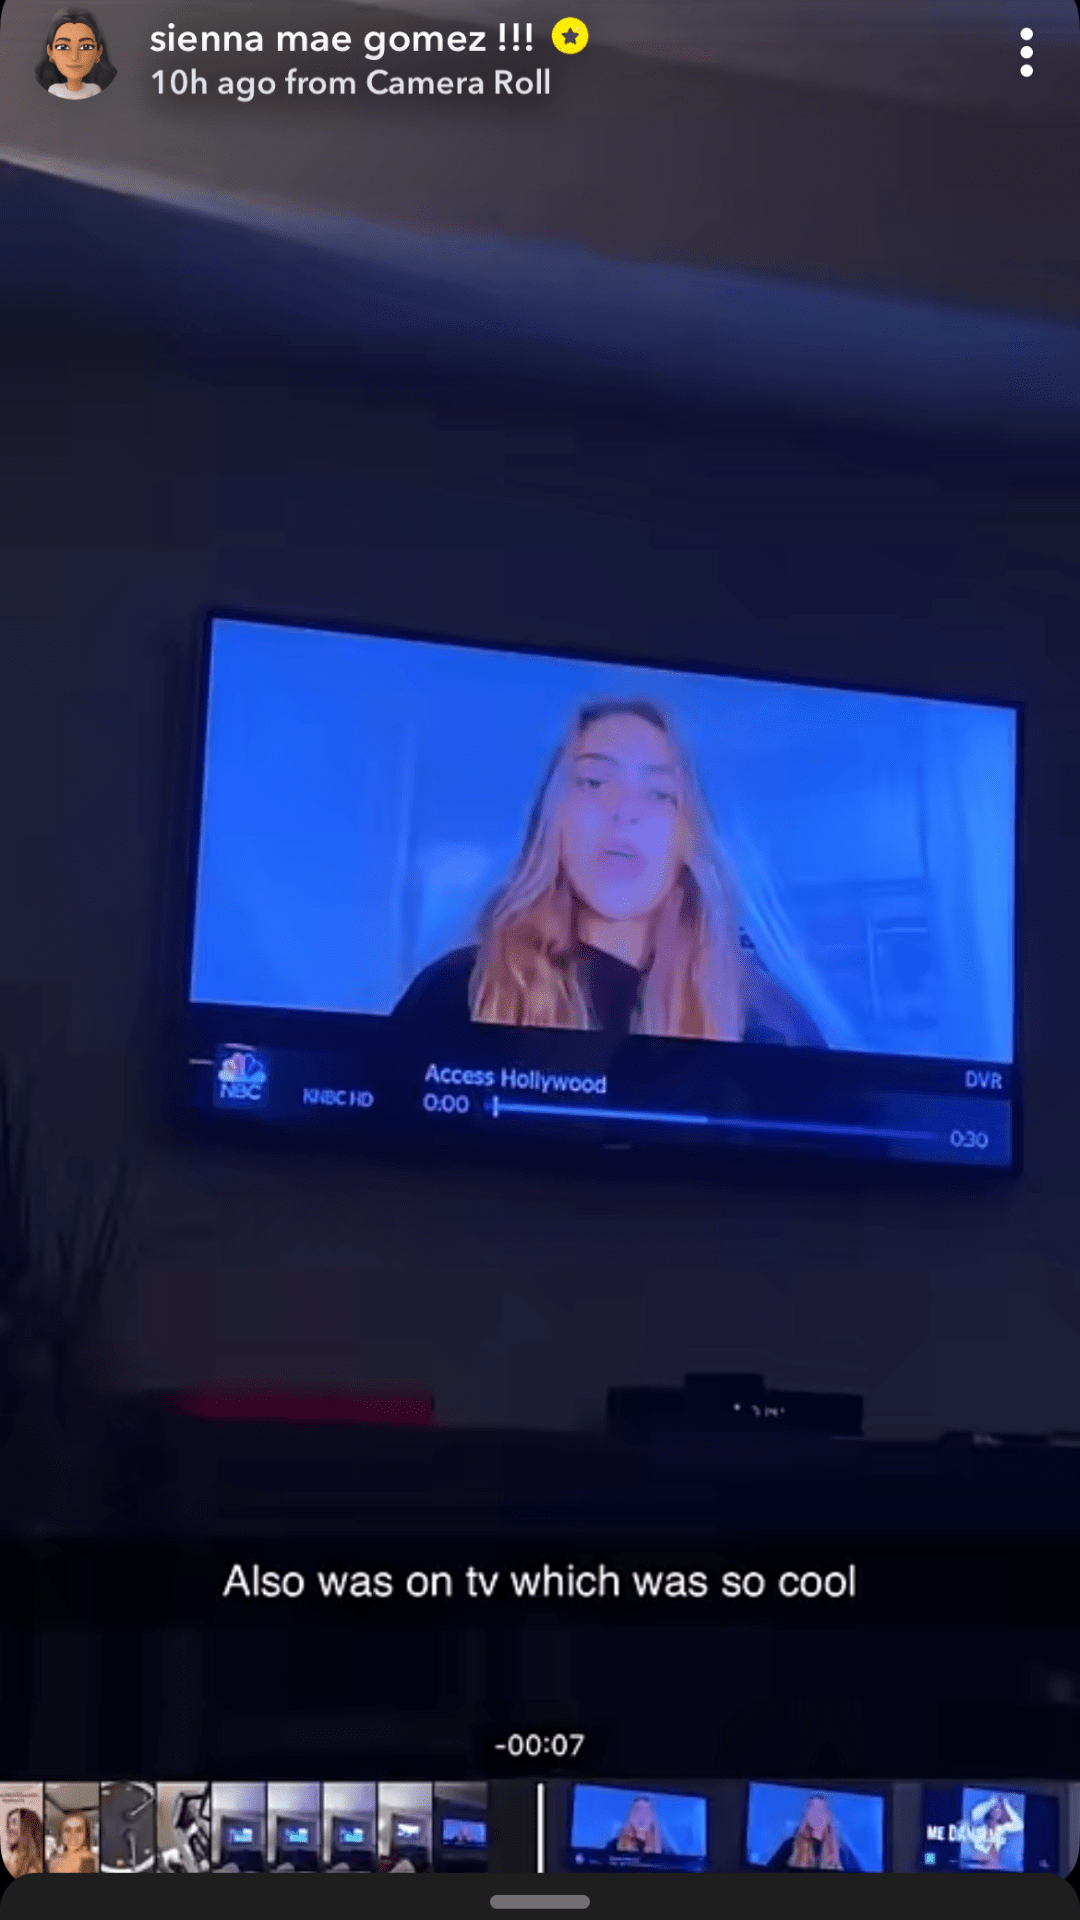 Girl on TV screen talking